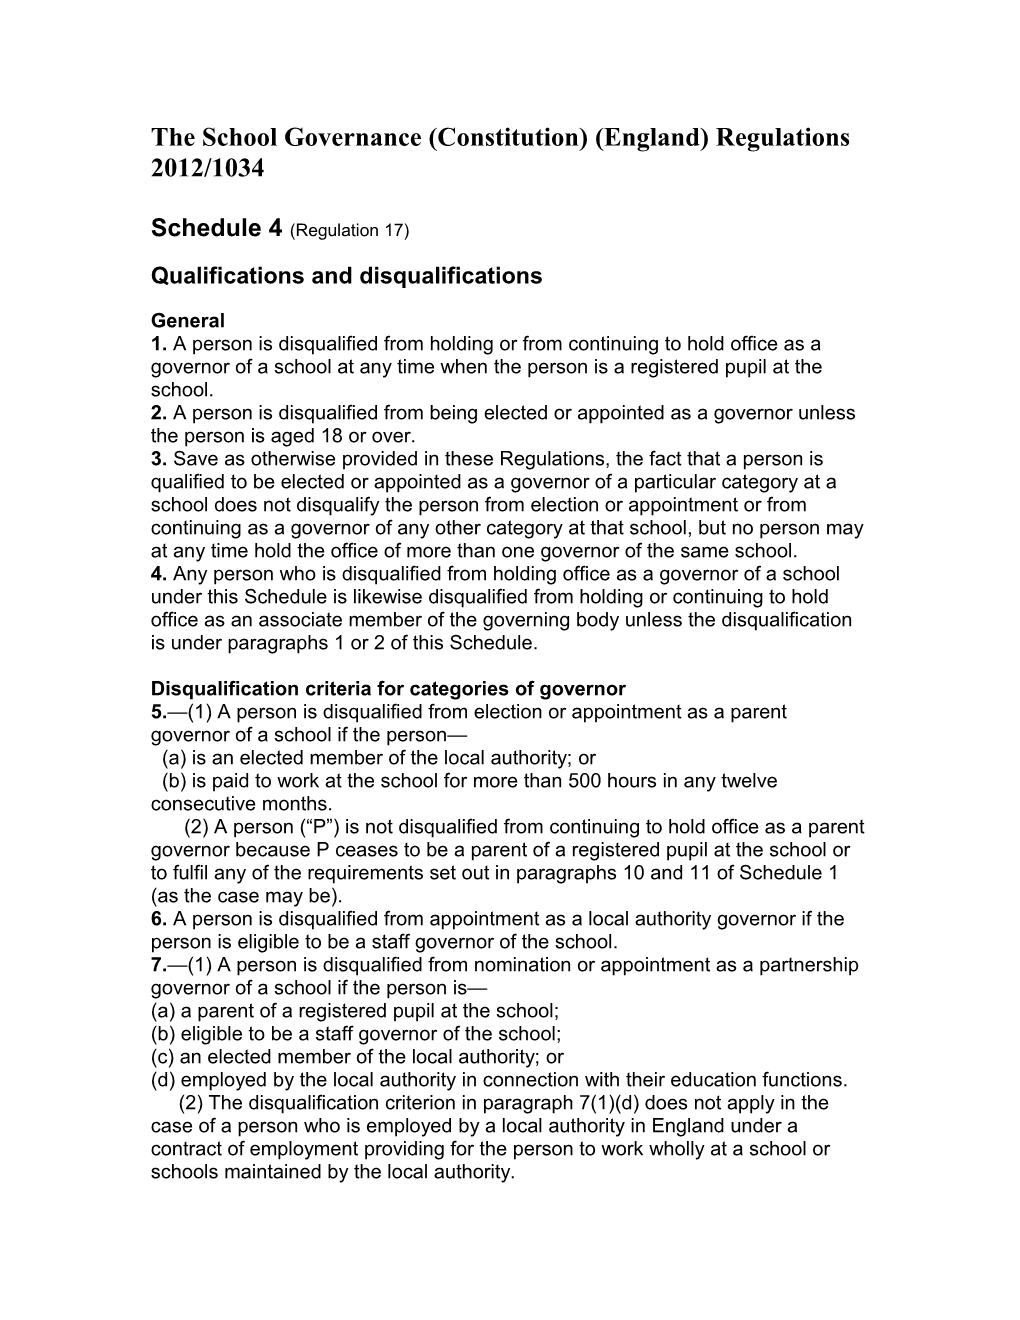 The School Governance (Constitution) (England) Regulations 2012/1034